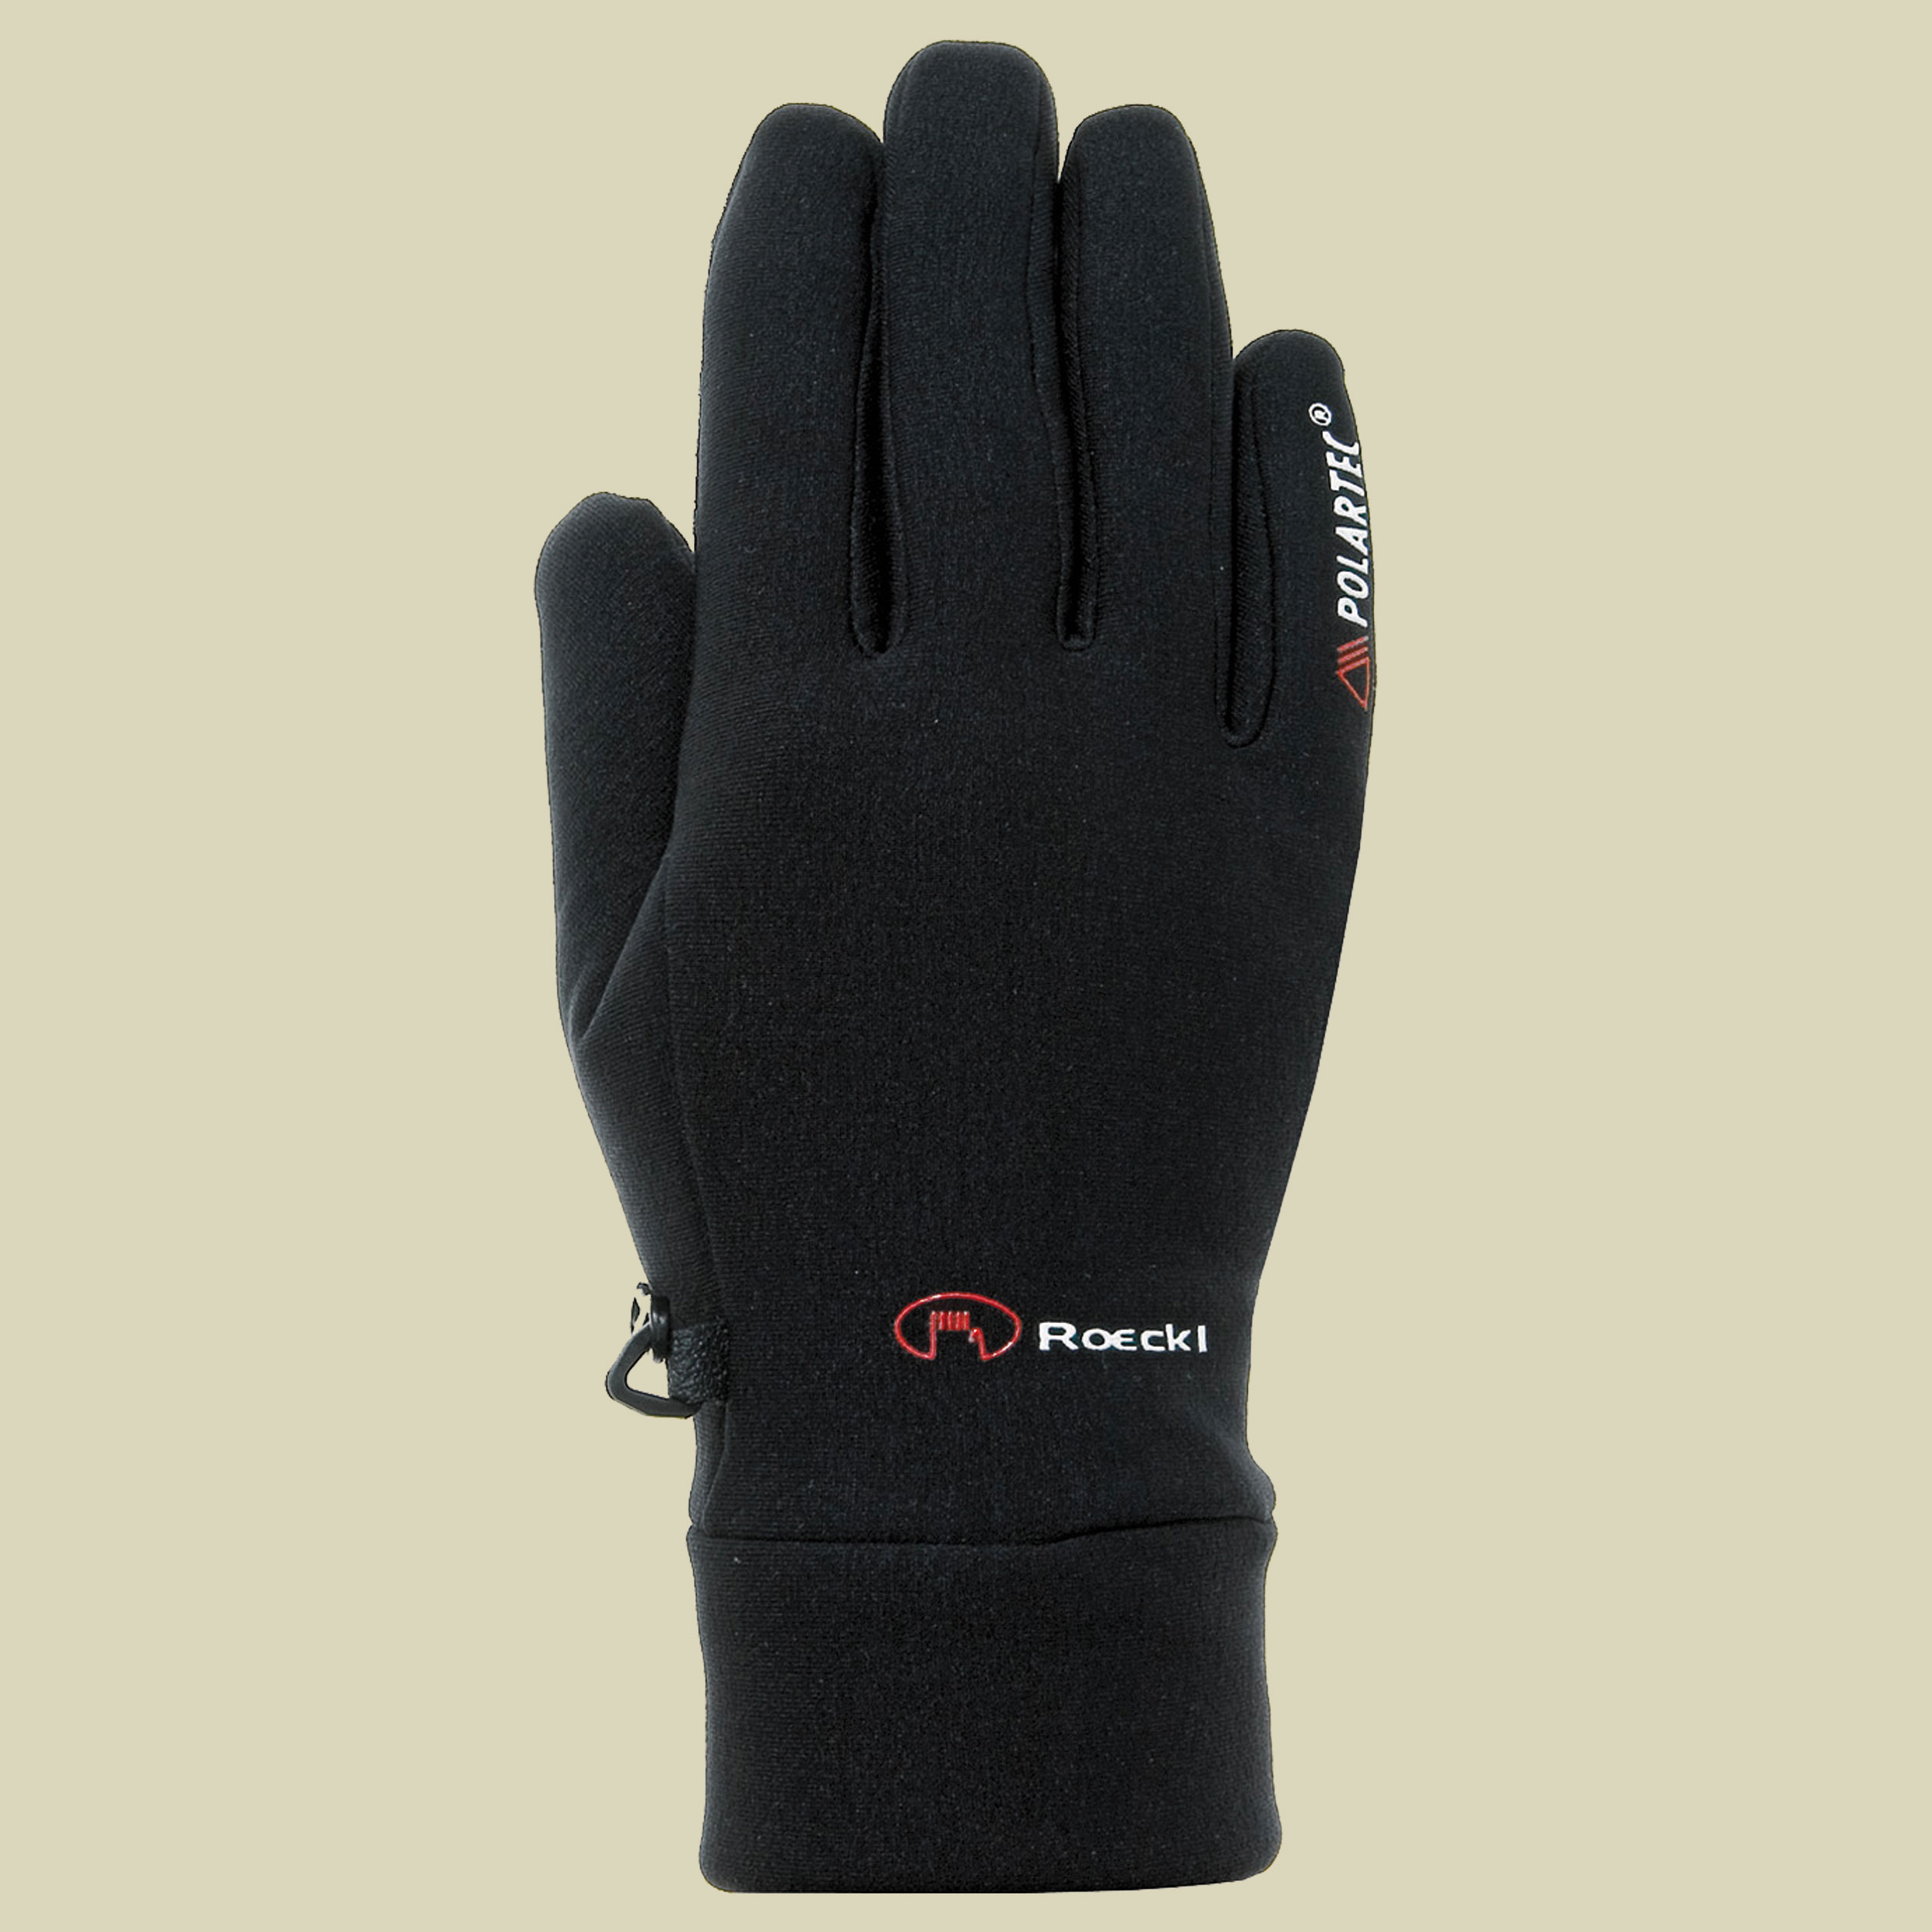 Katla Jr. Multisport Handschuh  Größe 5 Farbe schwarz